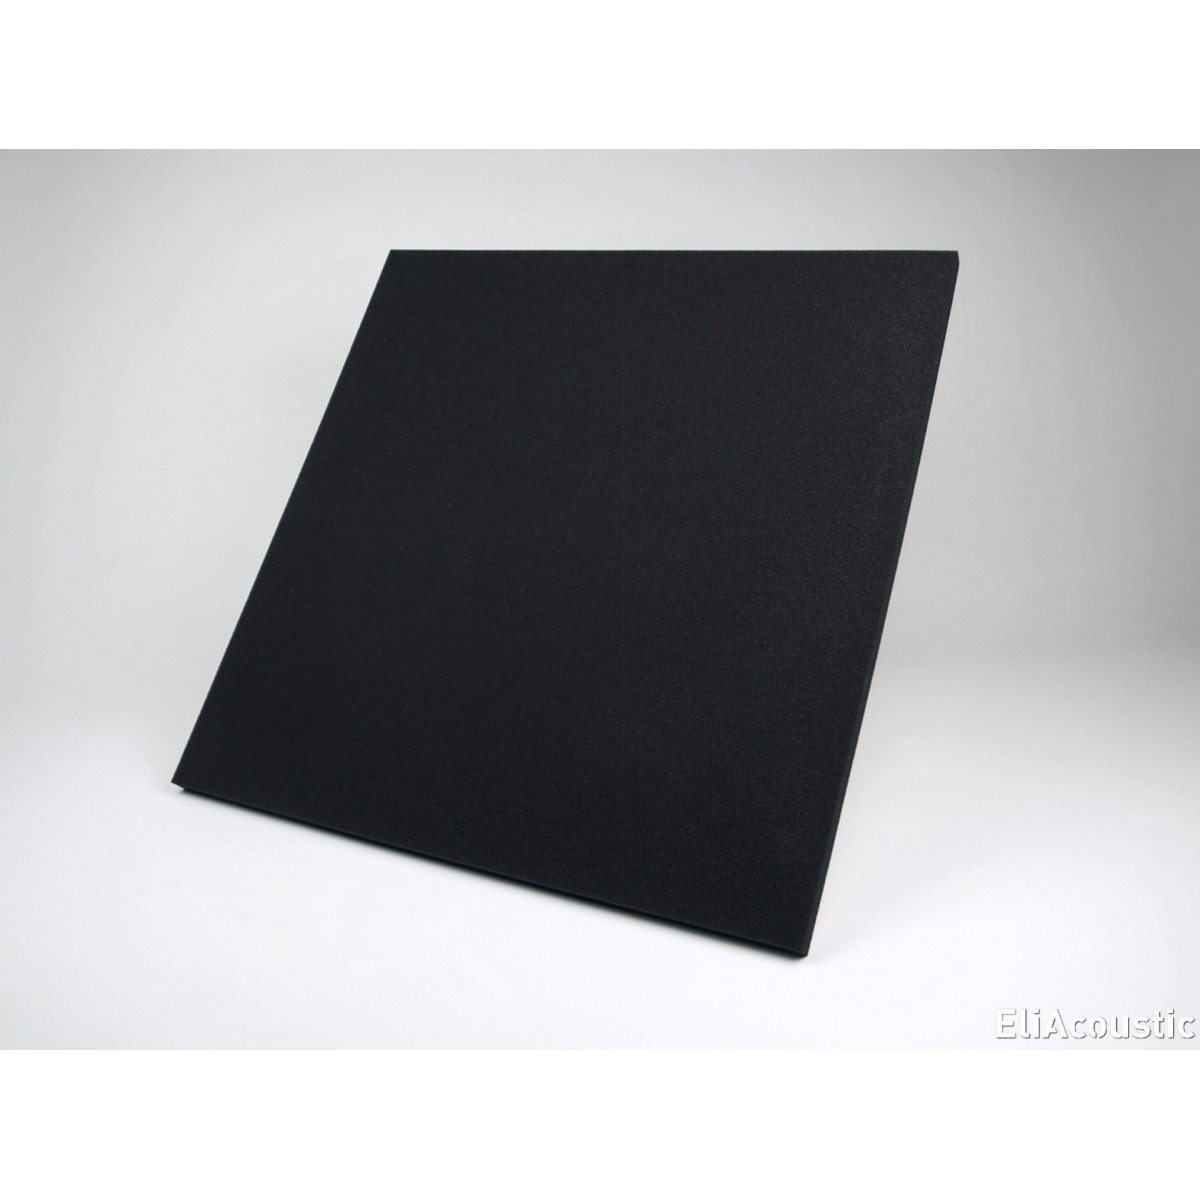 Regular panel 60.2 Pure Dark Black. Panel Acustico de espuma acustica coloreada